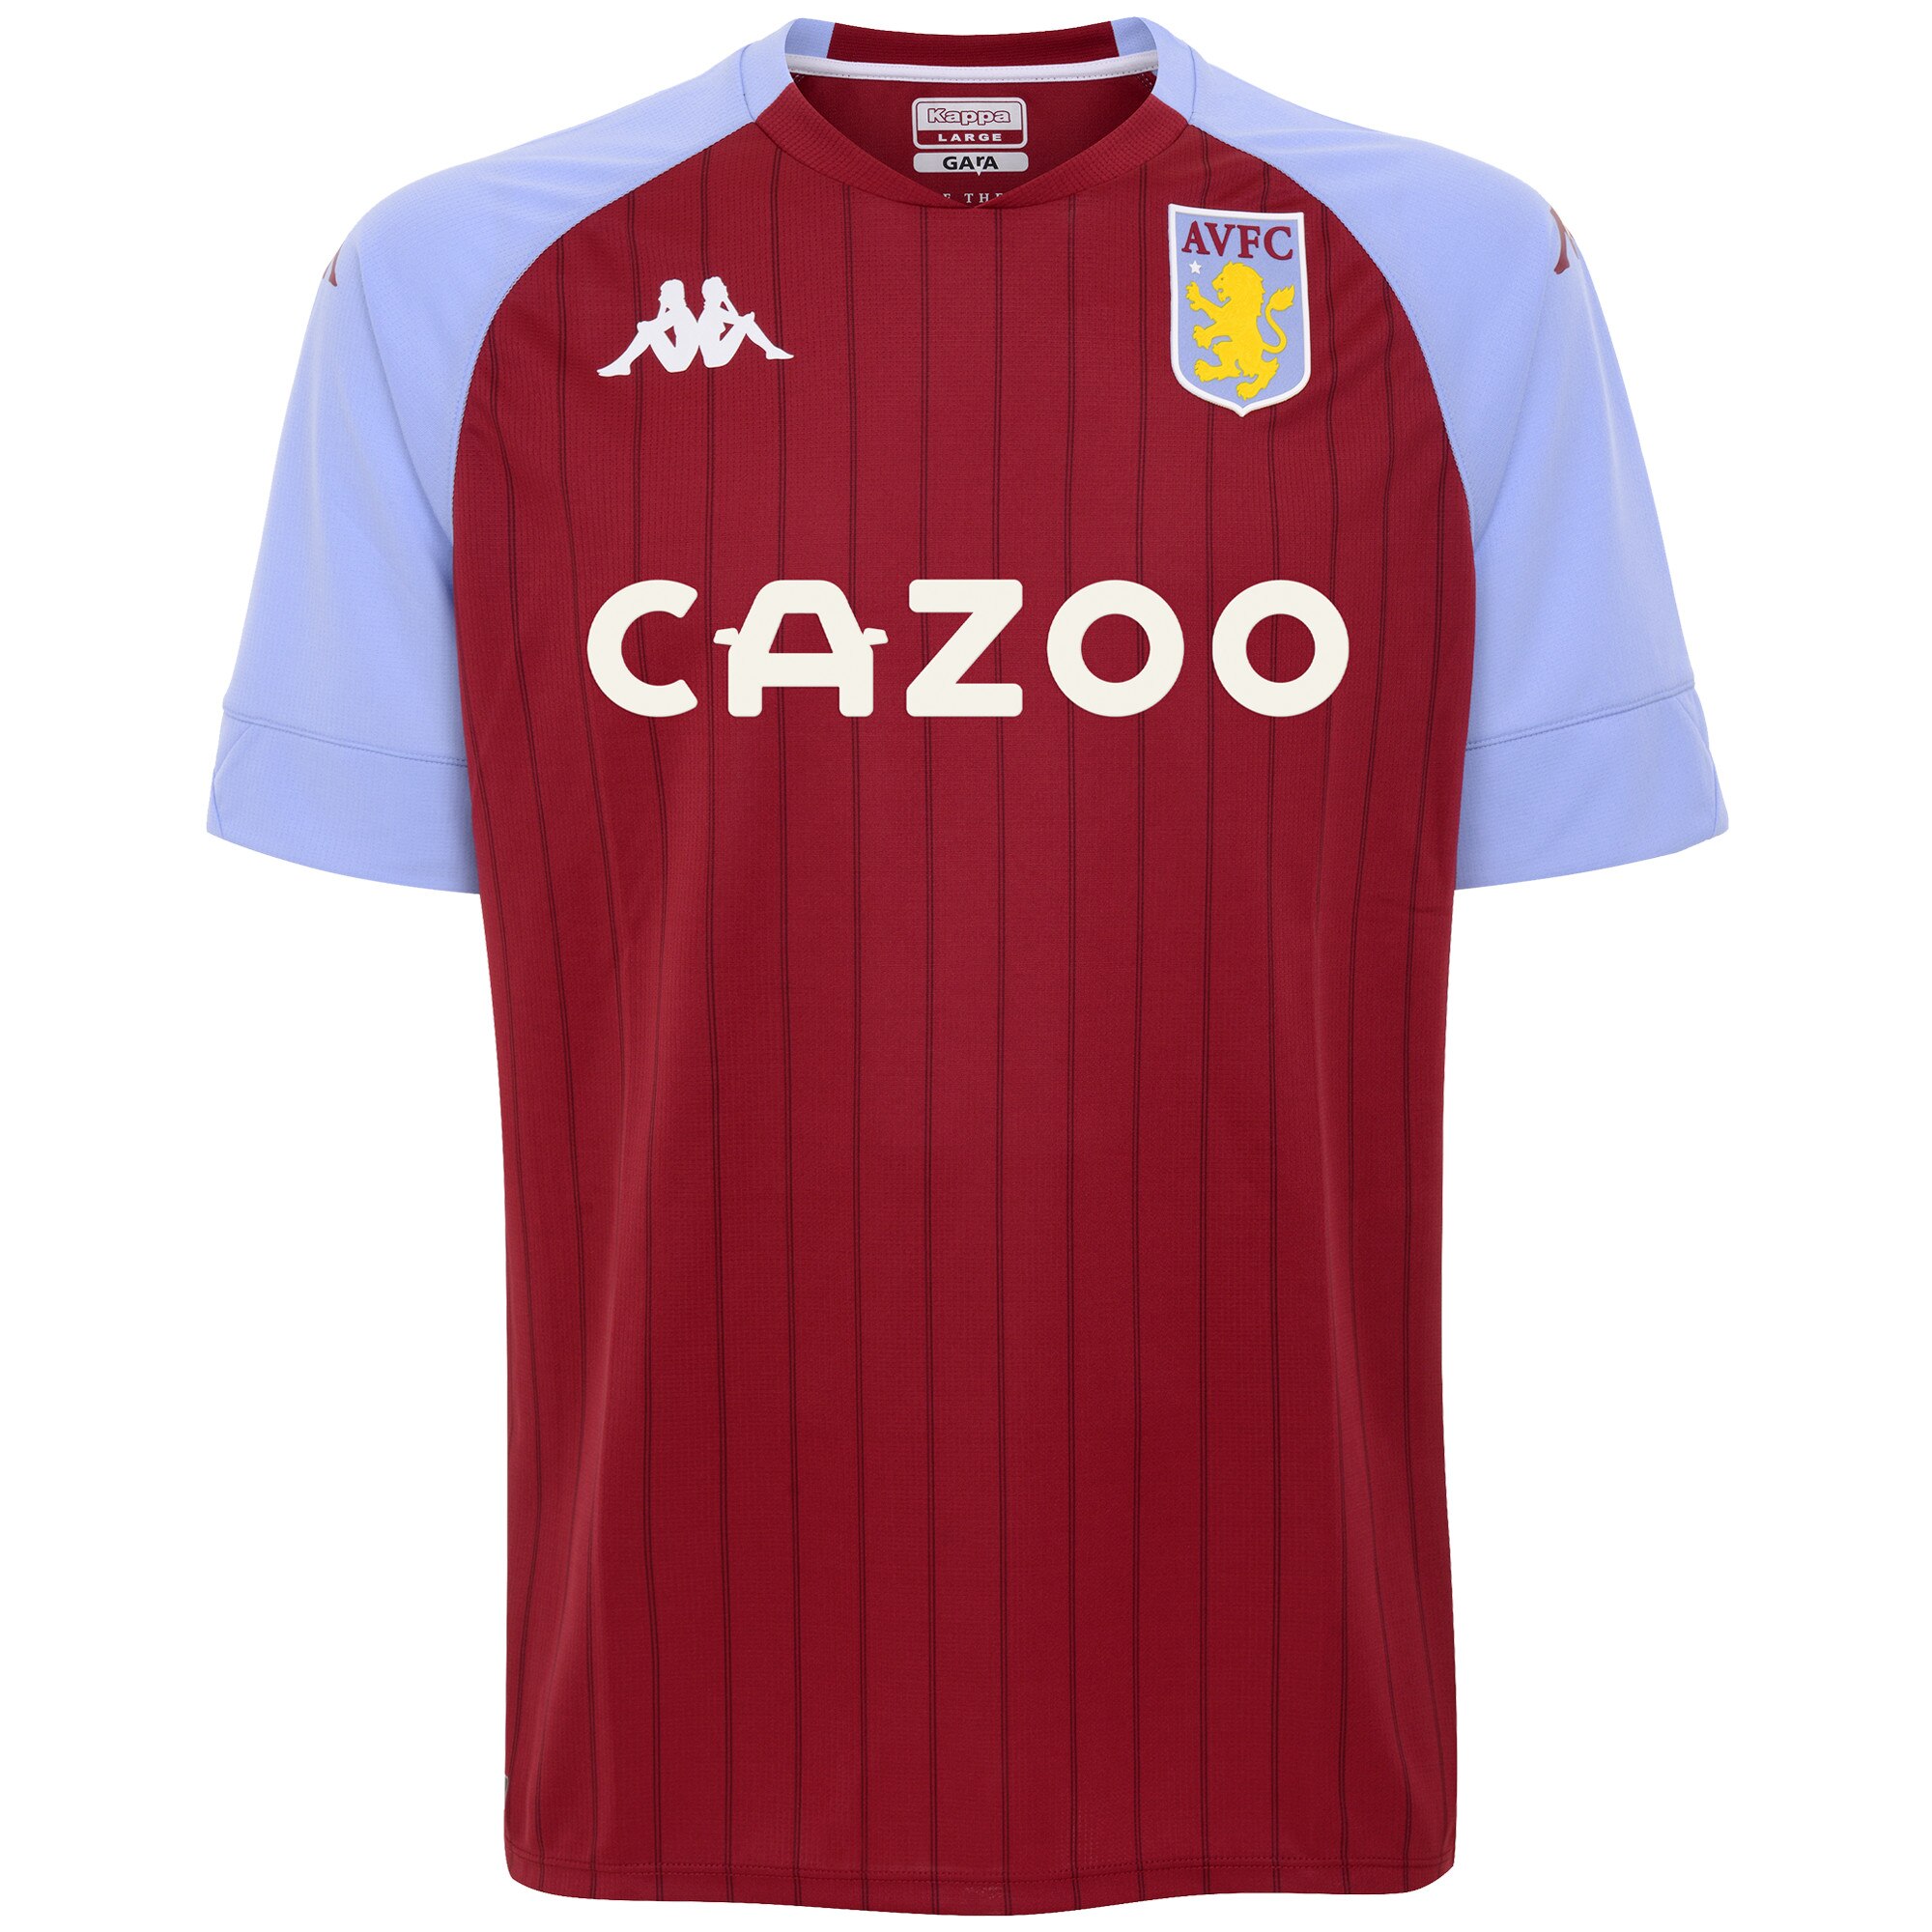 Aston Villa Home Stadium Shirt 2020-21 with Cash 2 printing